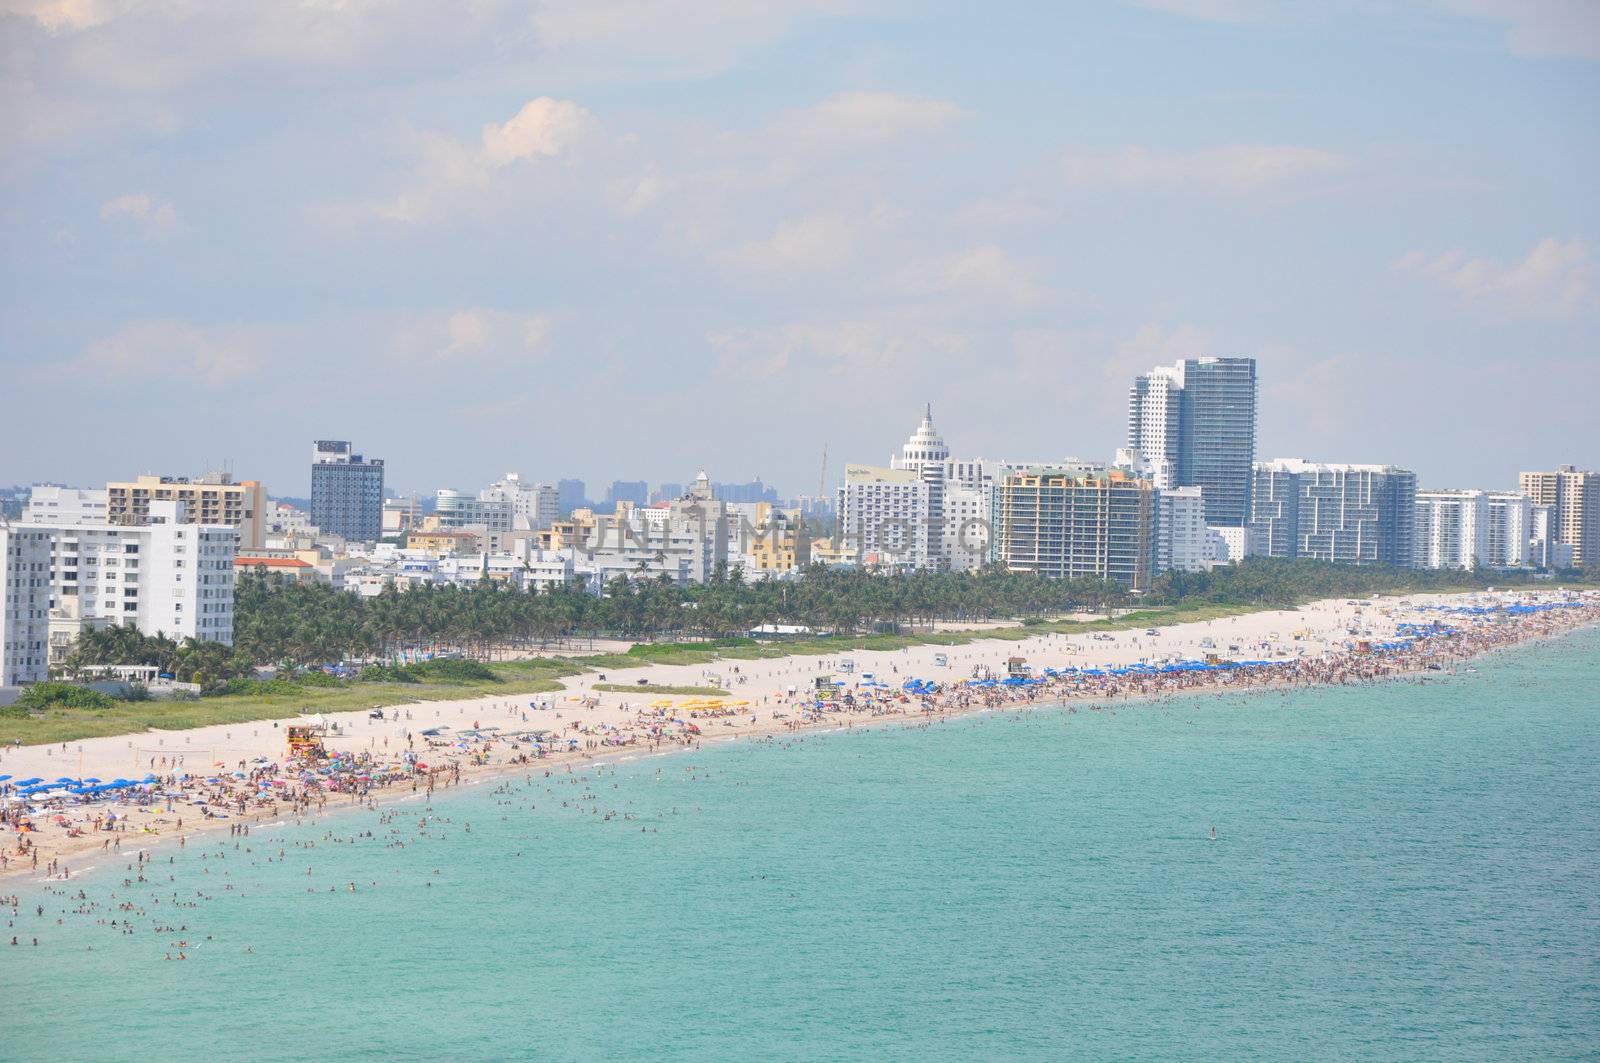 Miami Beach in Florida by sainaniritu